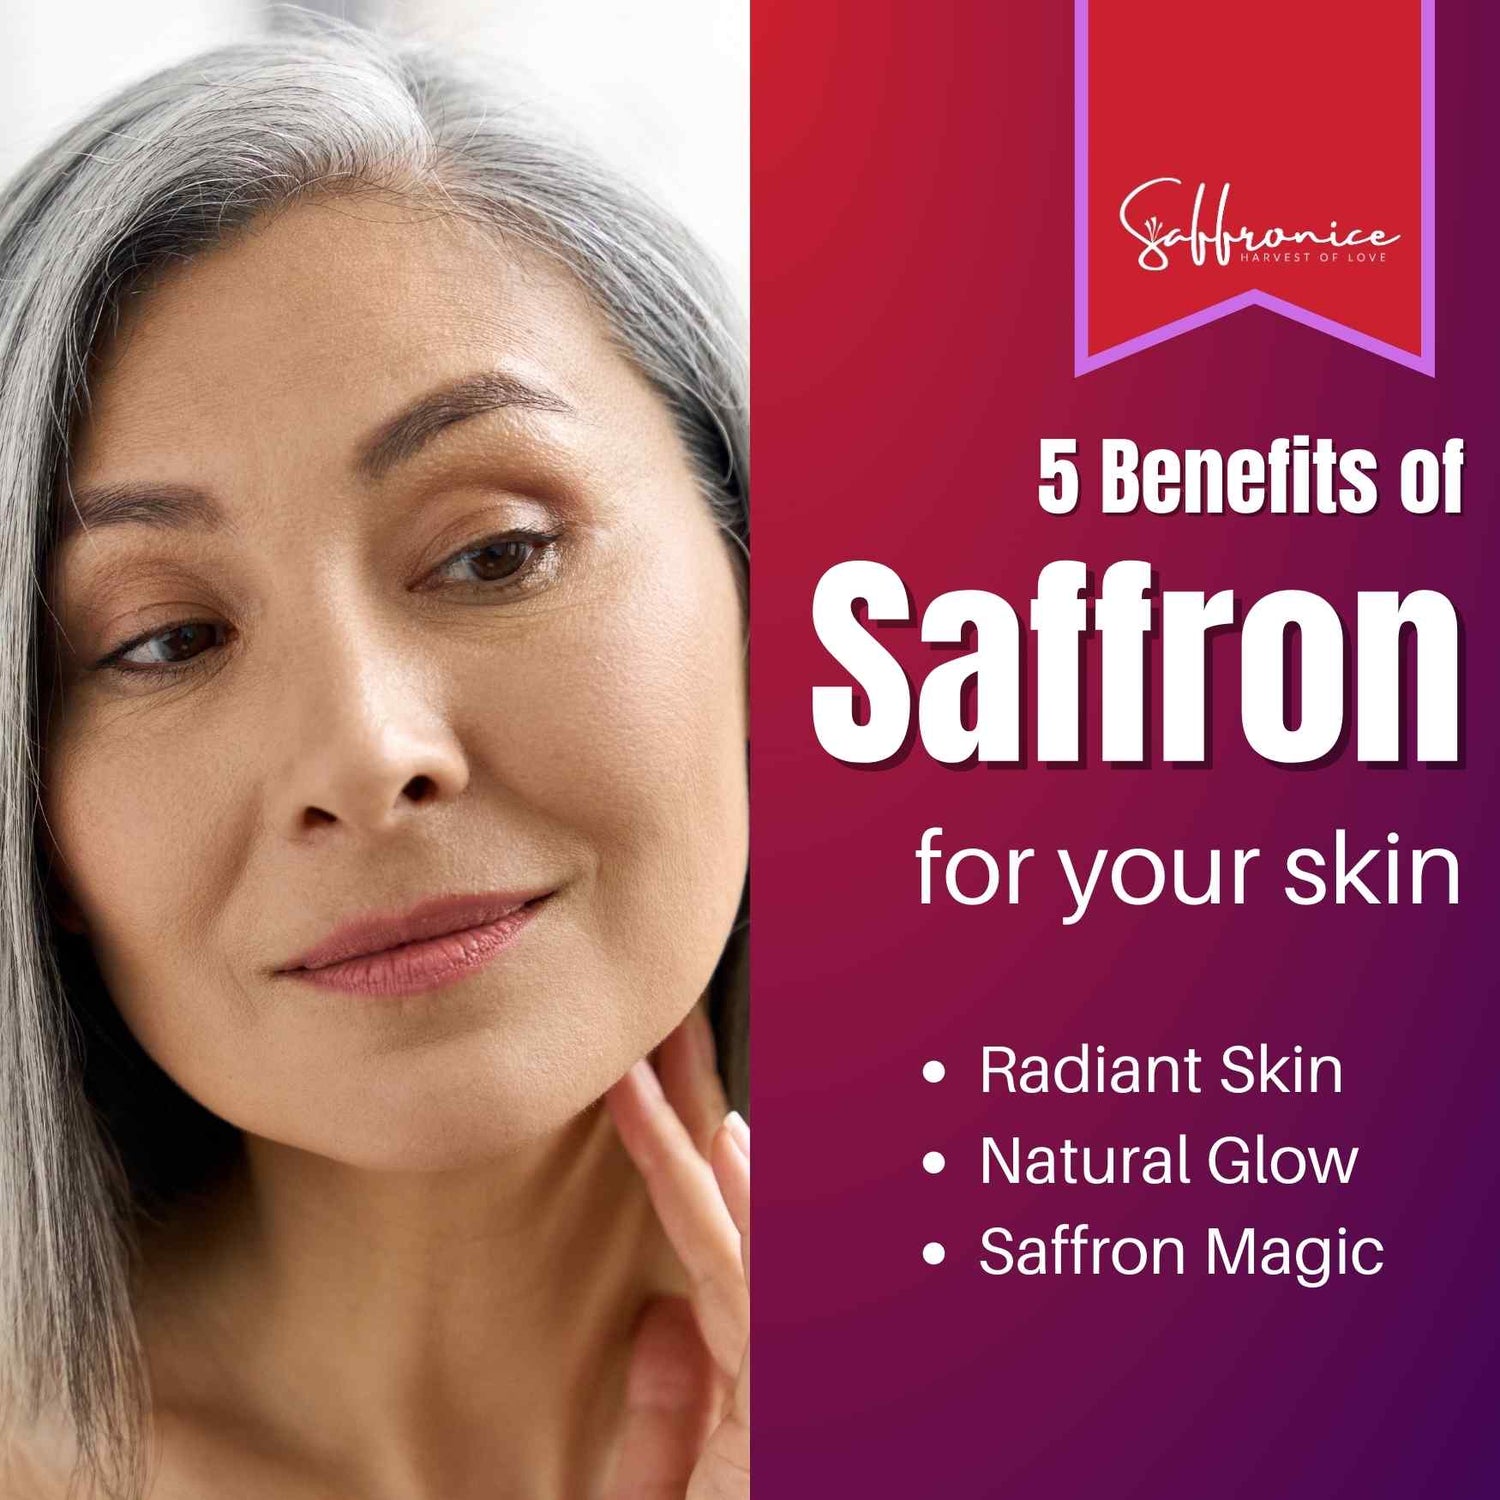 Benefits of Saffron for Skin